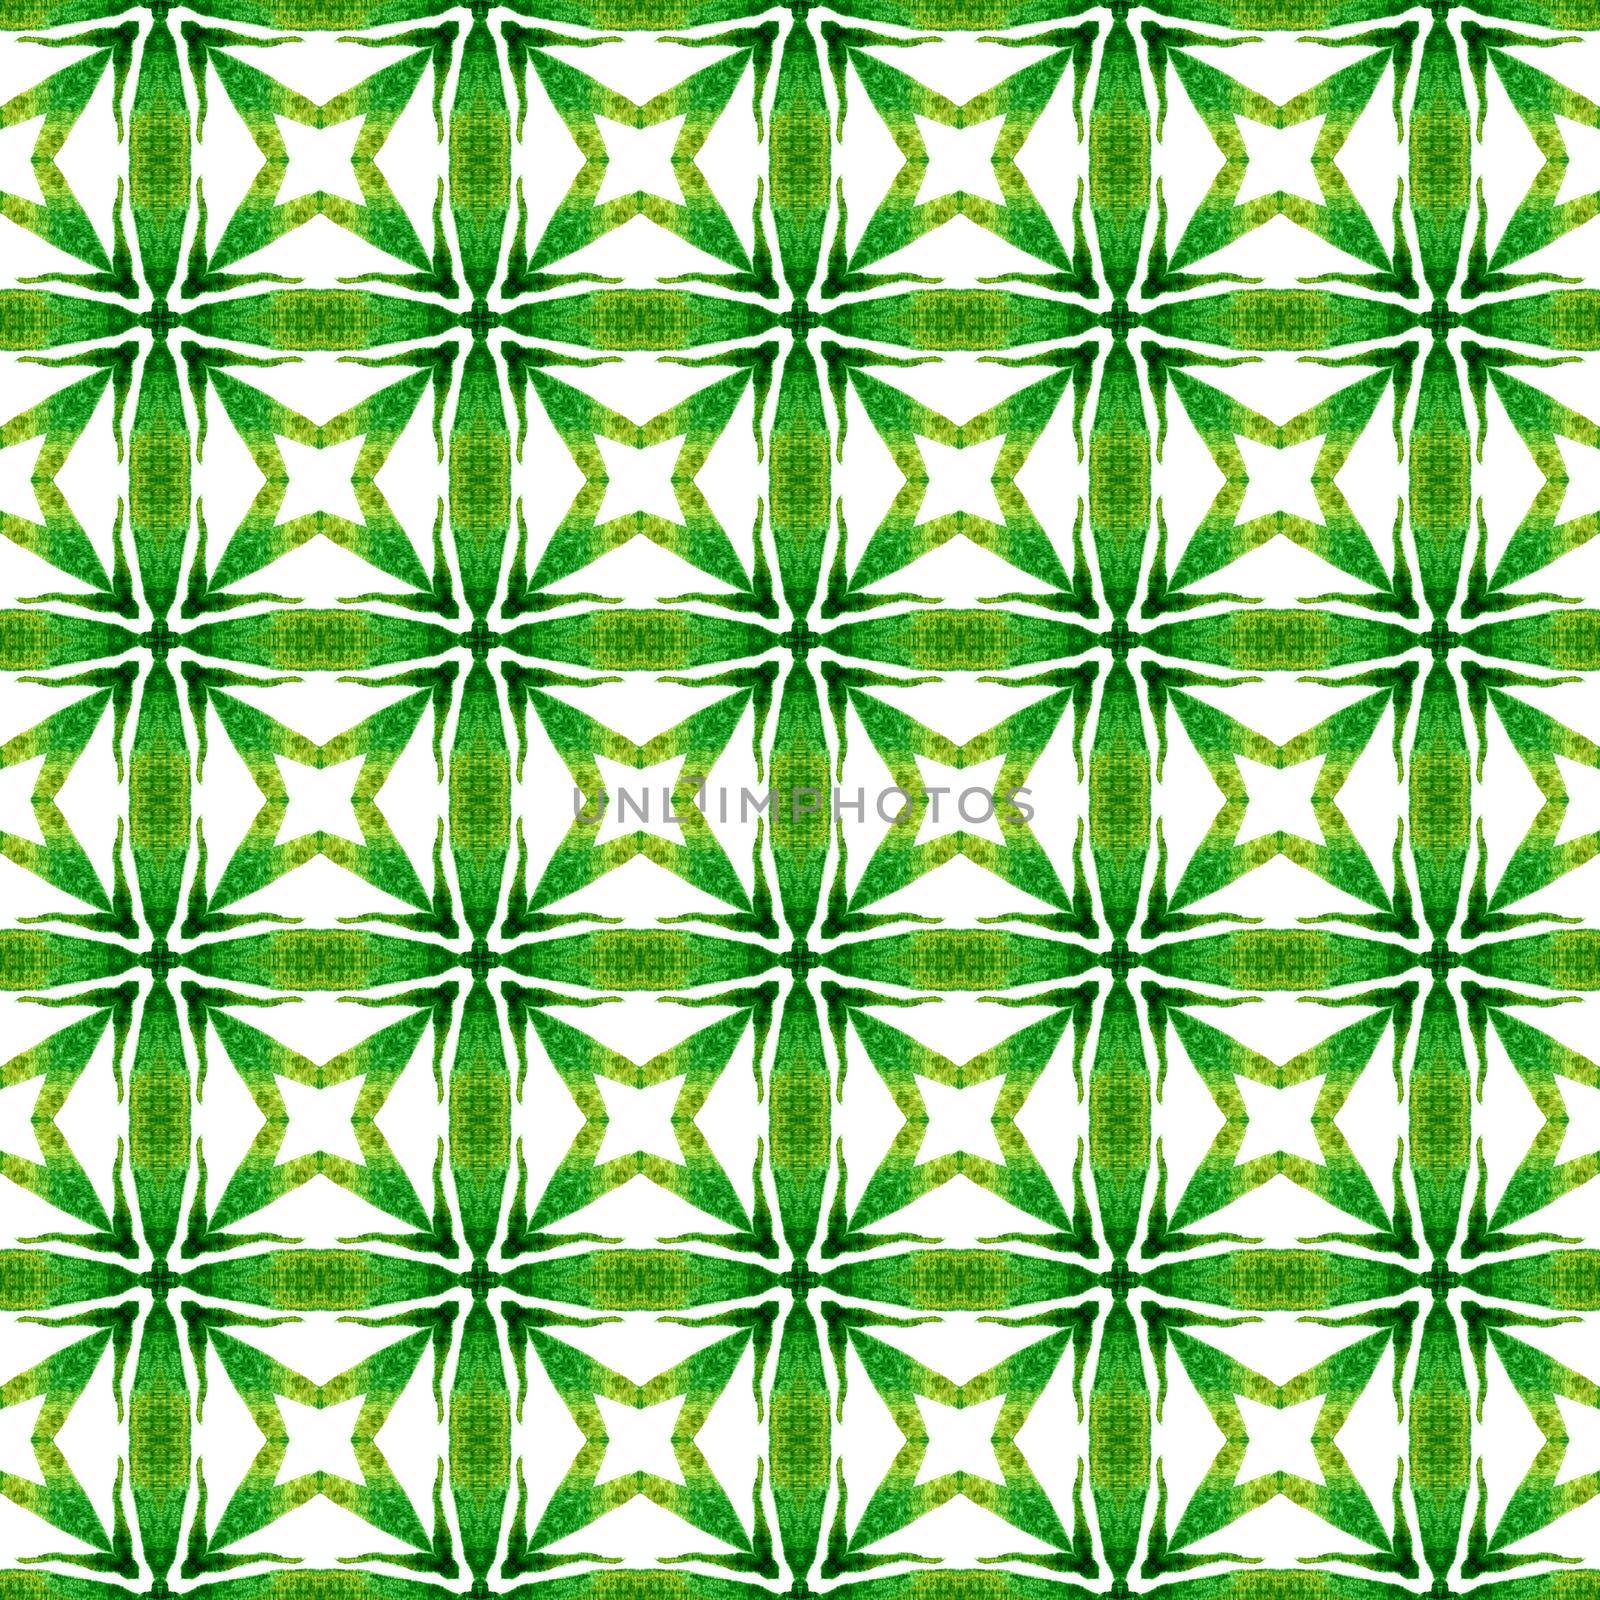 Textile ready Actual print, swimwear fabric, wallpaper, wrapping. Green good-looking boho chic summer design. Chevron watercolor pattern. Green geometric chevron watercolor border.